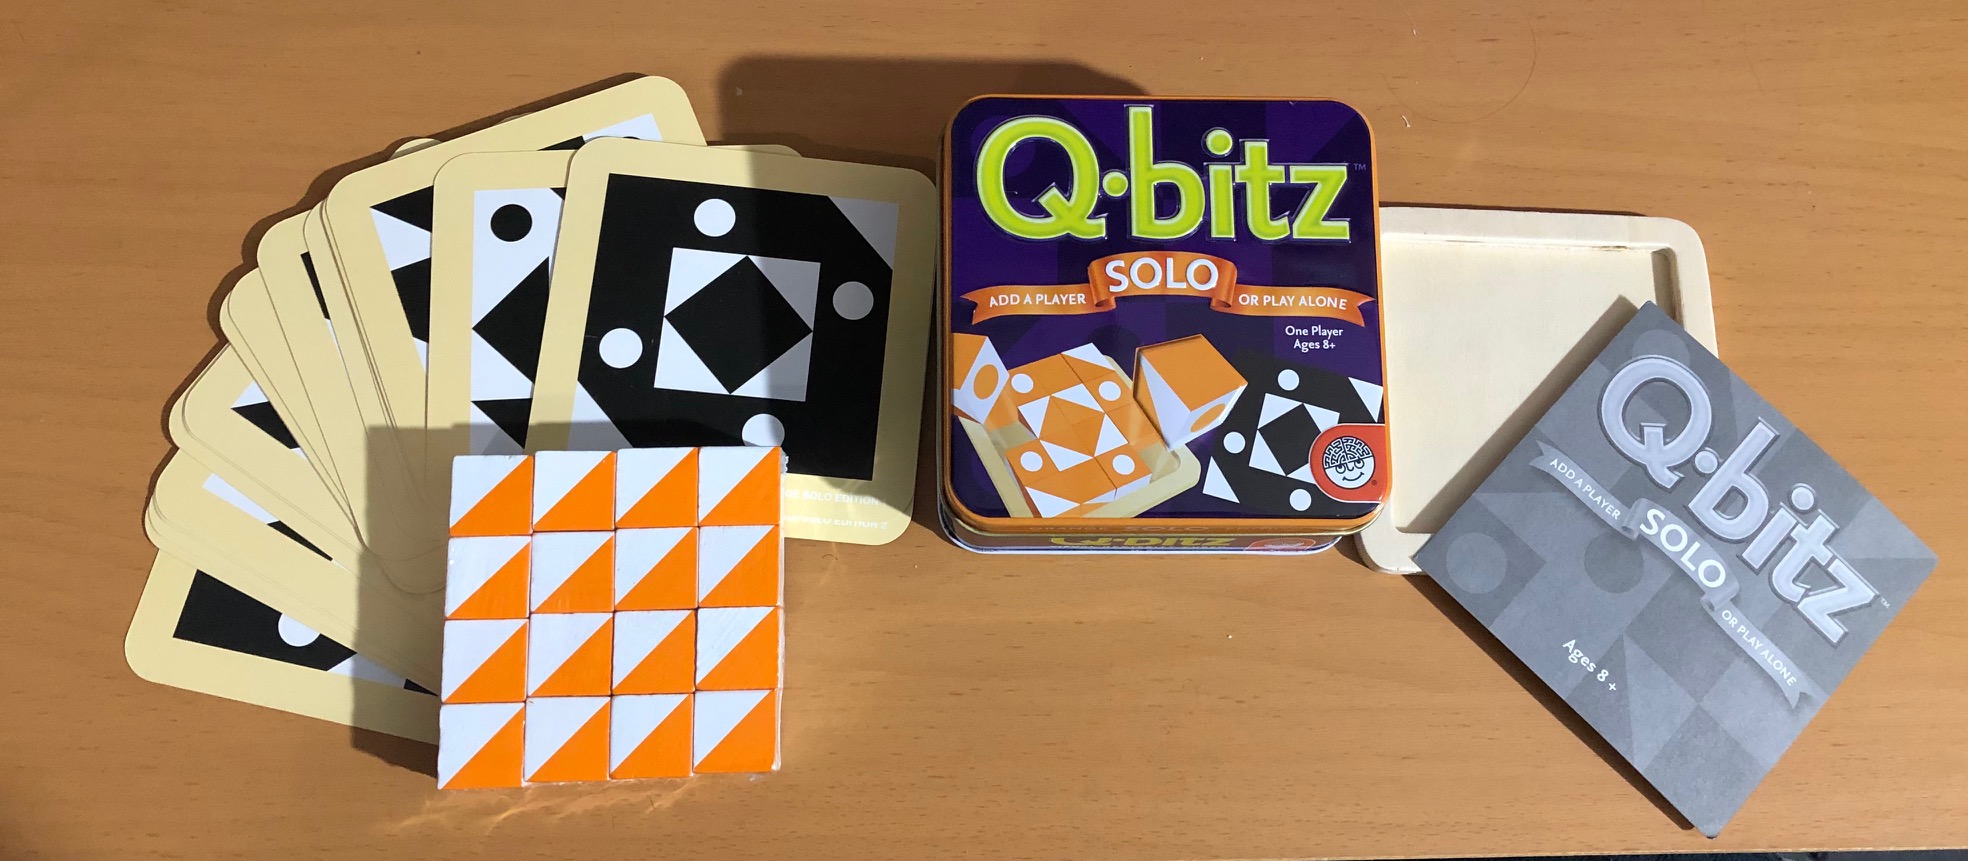 Q-bitz (solo orange) – The Unboxinating! – U-Con Gaming Convention